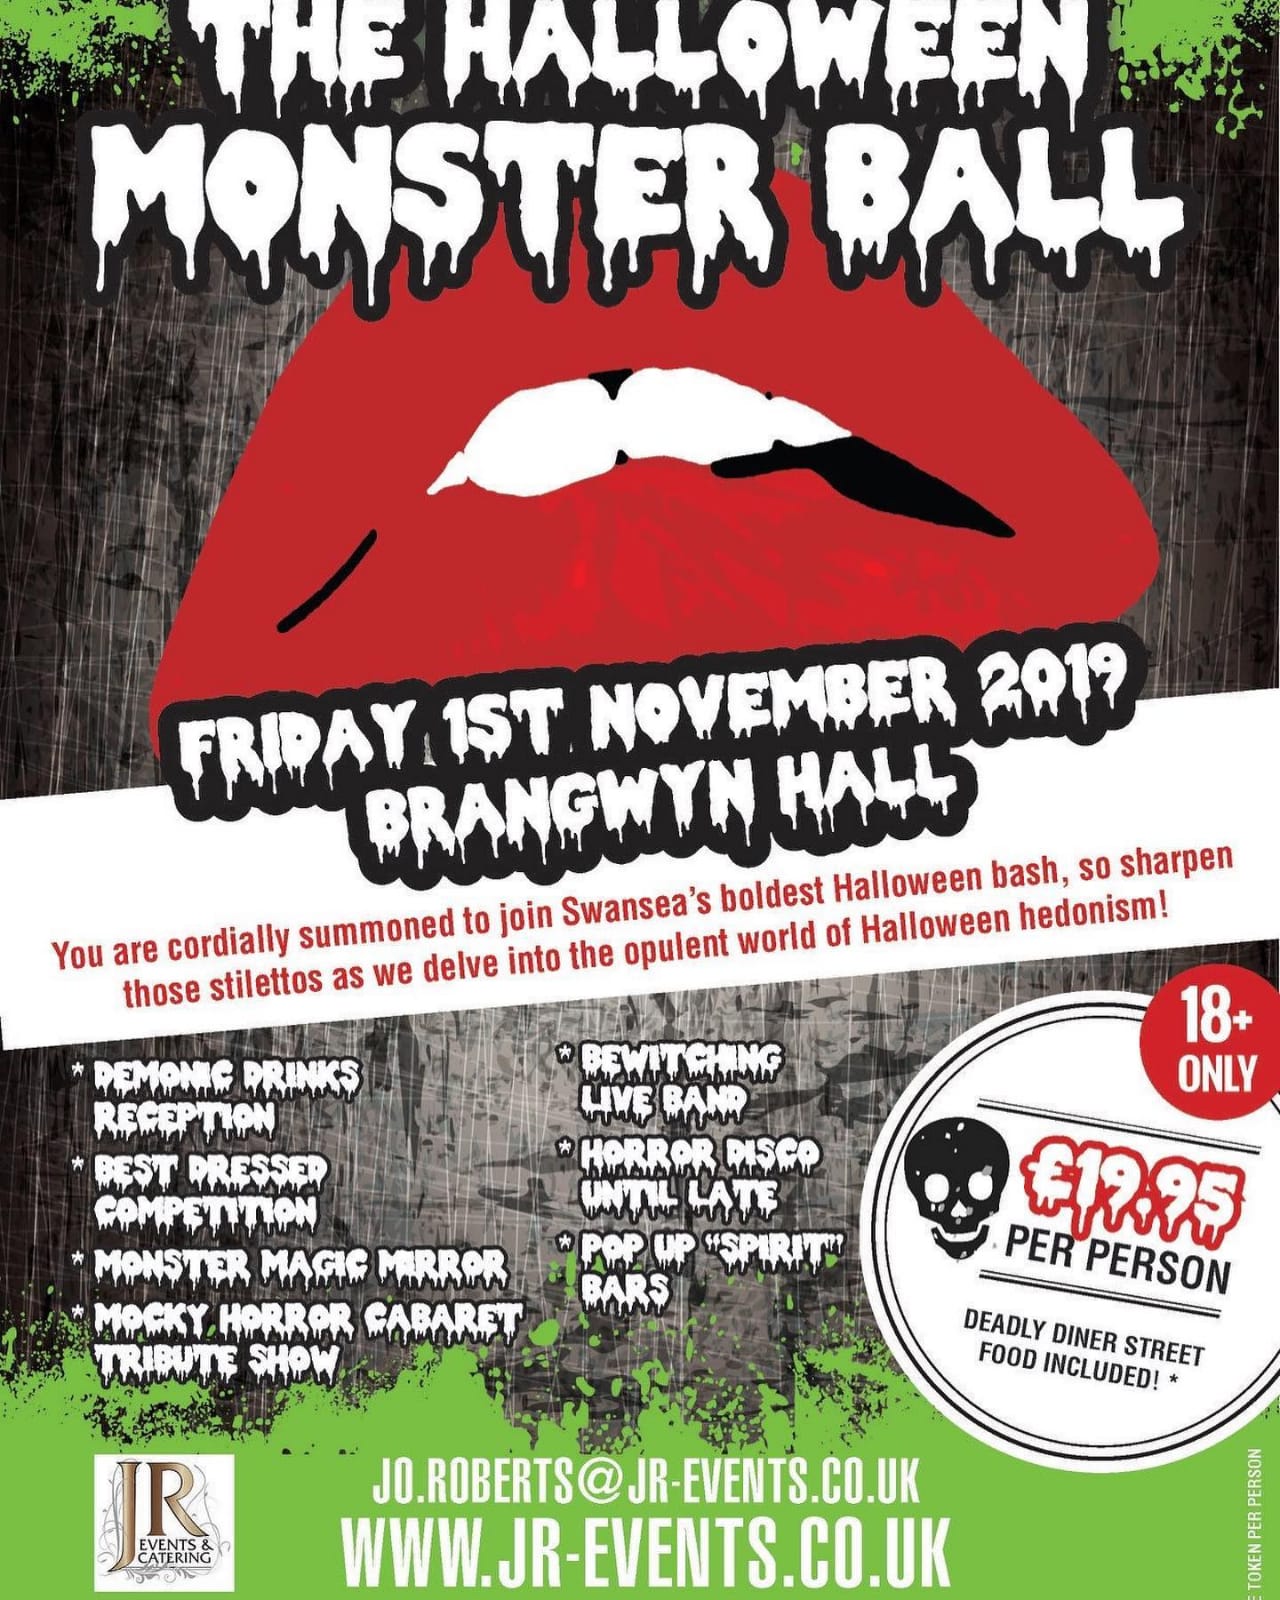 Stefan Pejic performing as Frank-n-Furter at The Halloween Monster Ball, Brangwyn Hall on Friday 1st November 2019